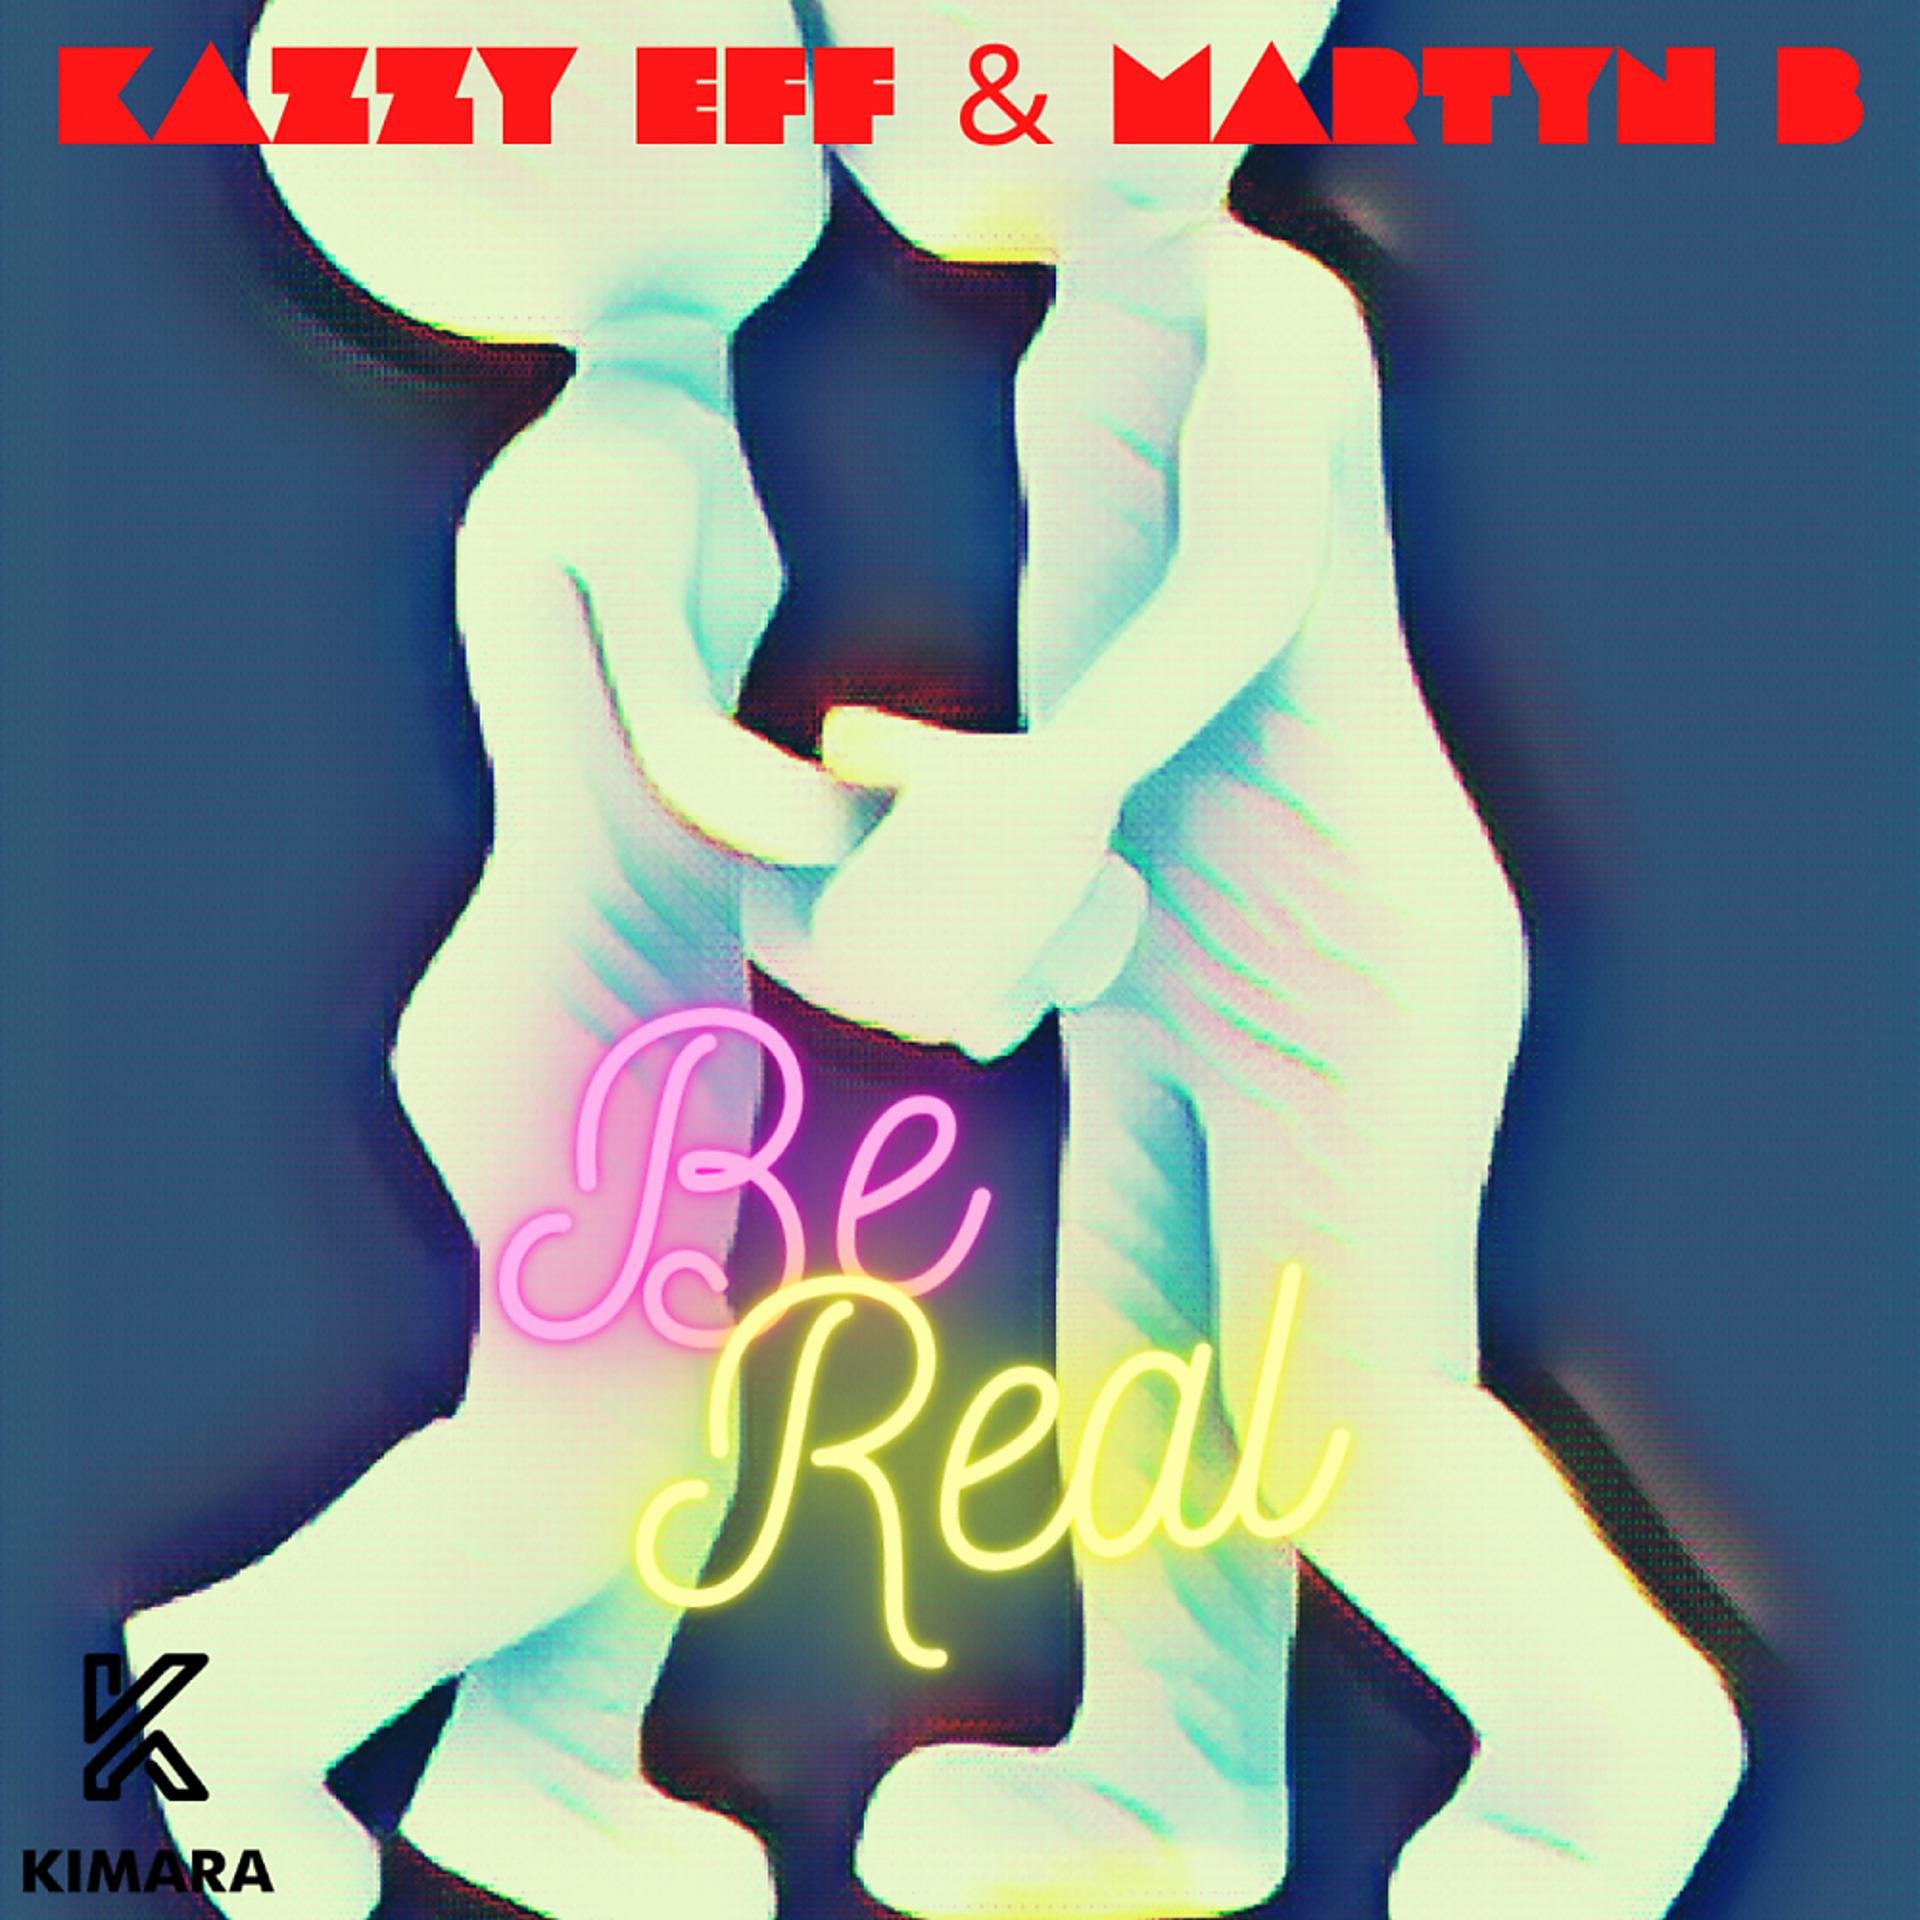 Постер к треку Kazzy Eff, Martyn B - Be Real